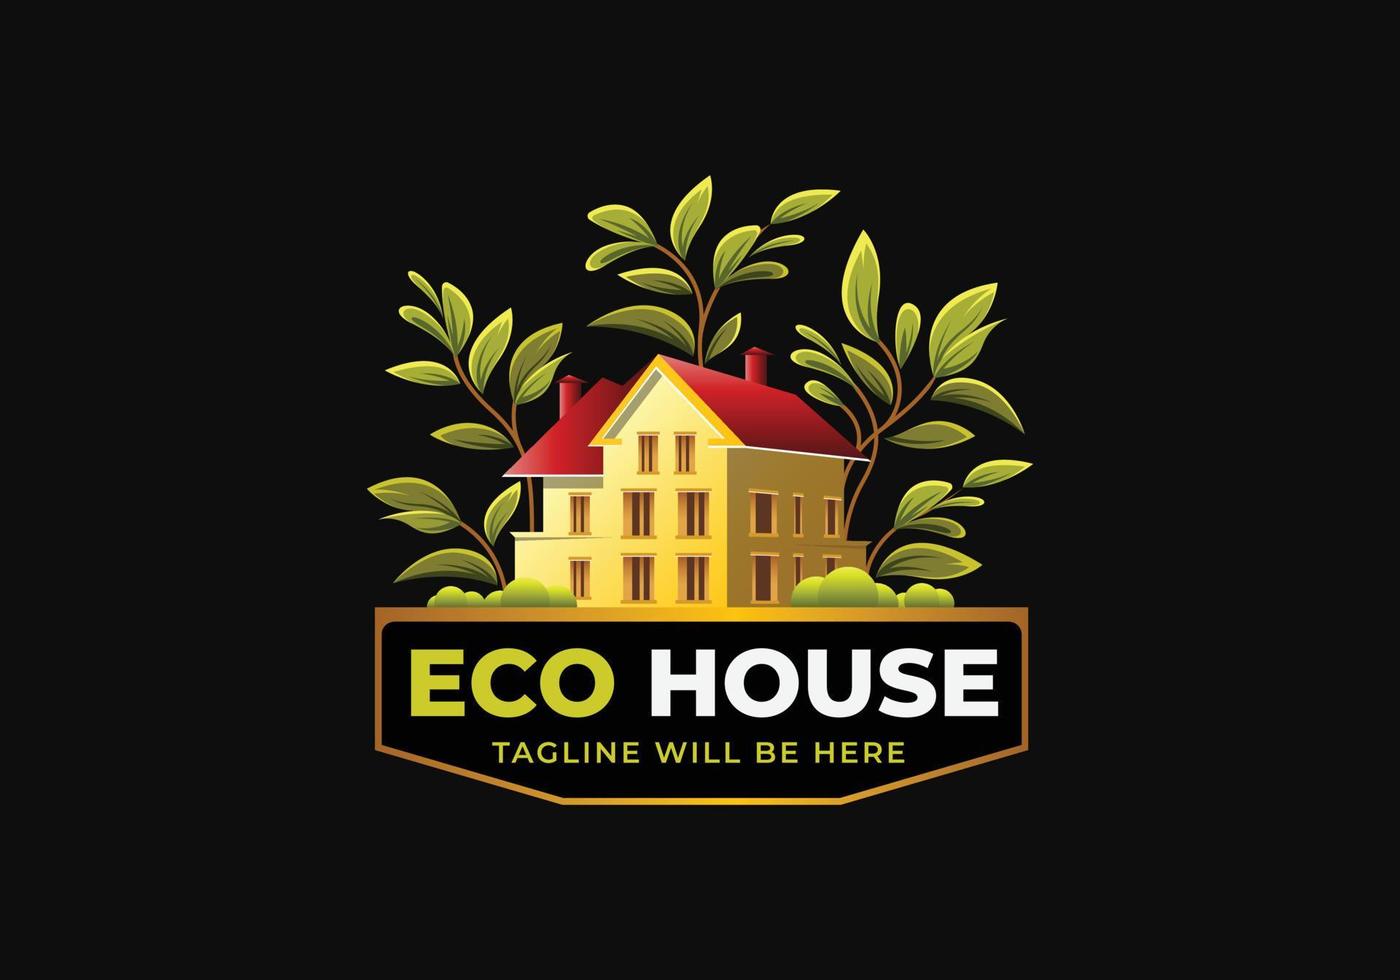 echt landgoed logo eco huis logo bloemen huis logo boerderij logo huisje logo boom huis logo huis decor logo vector